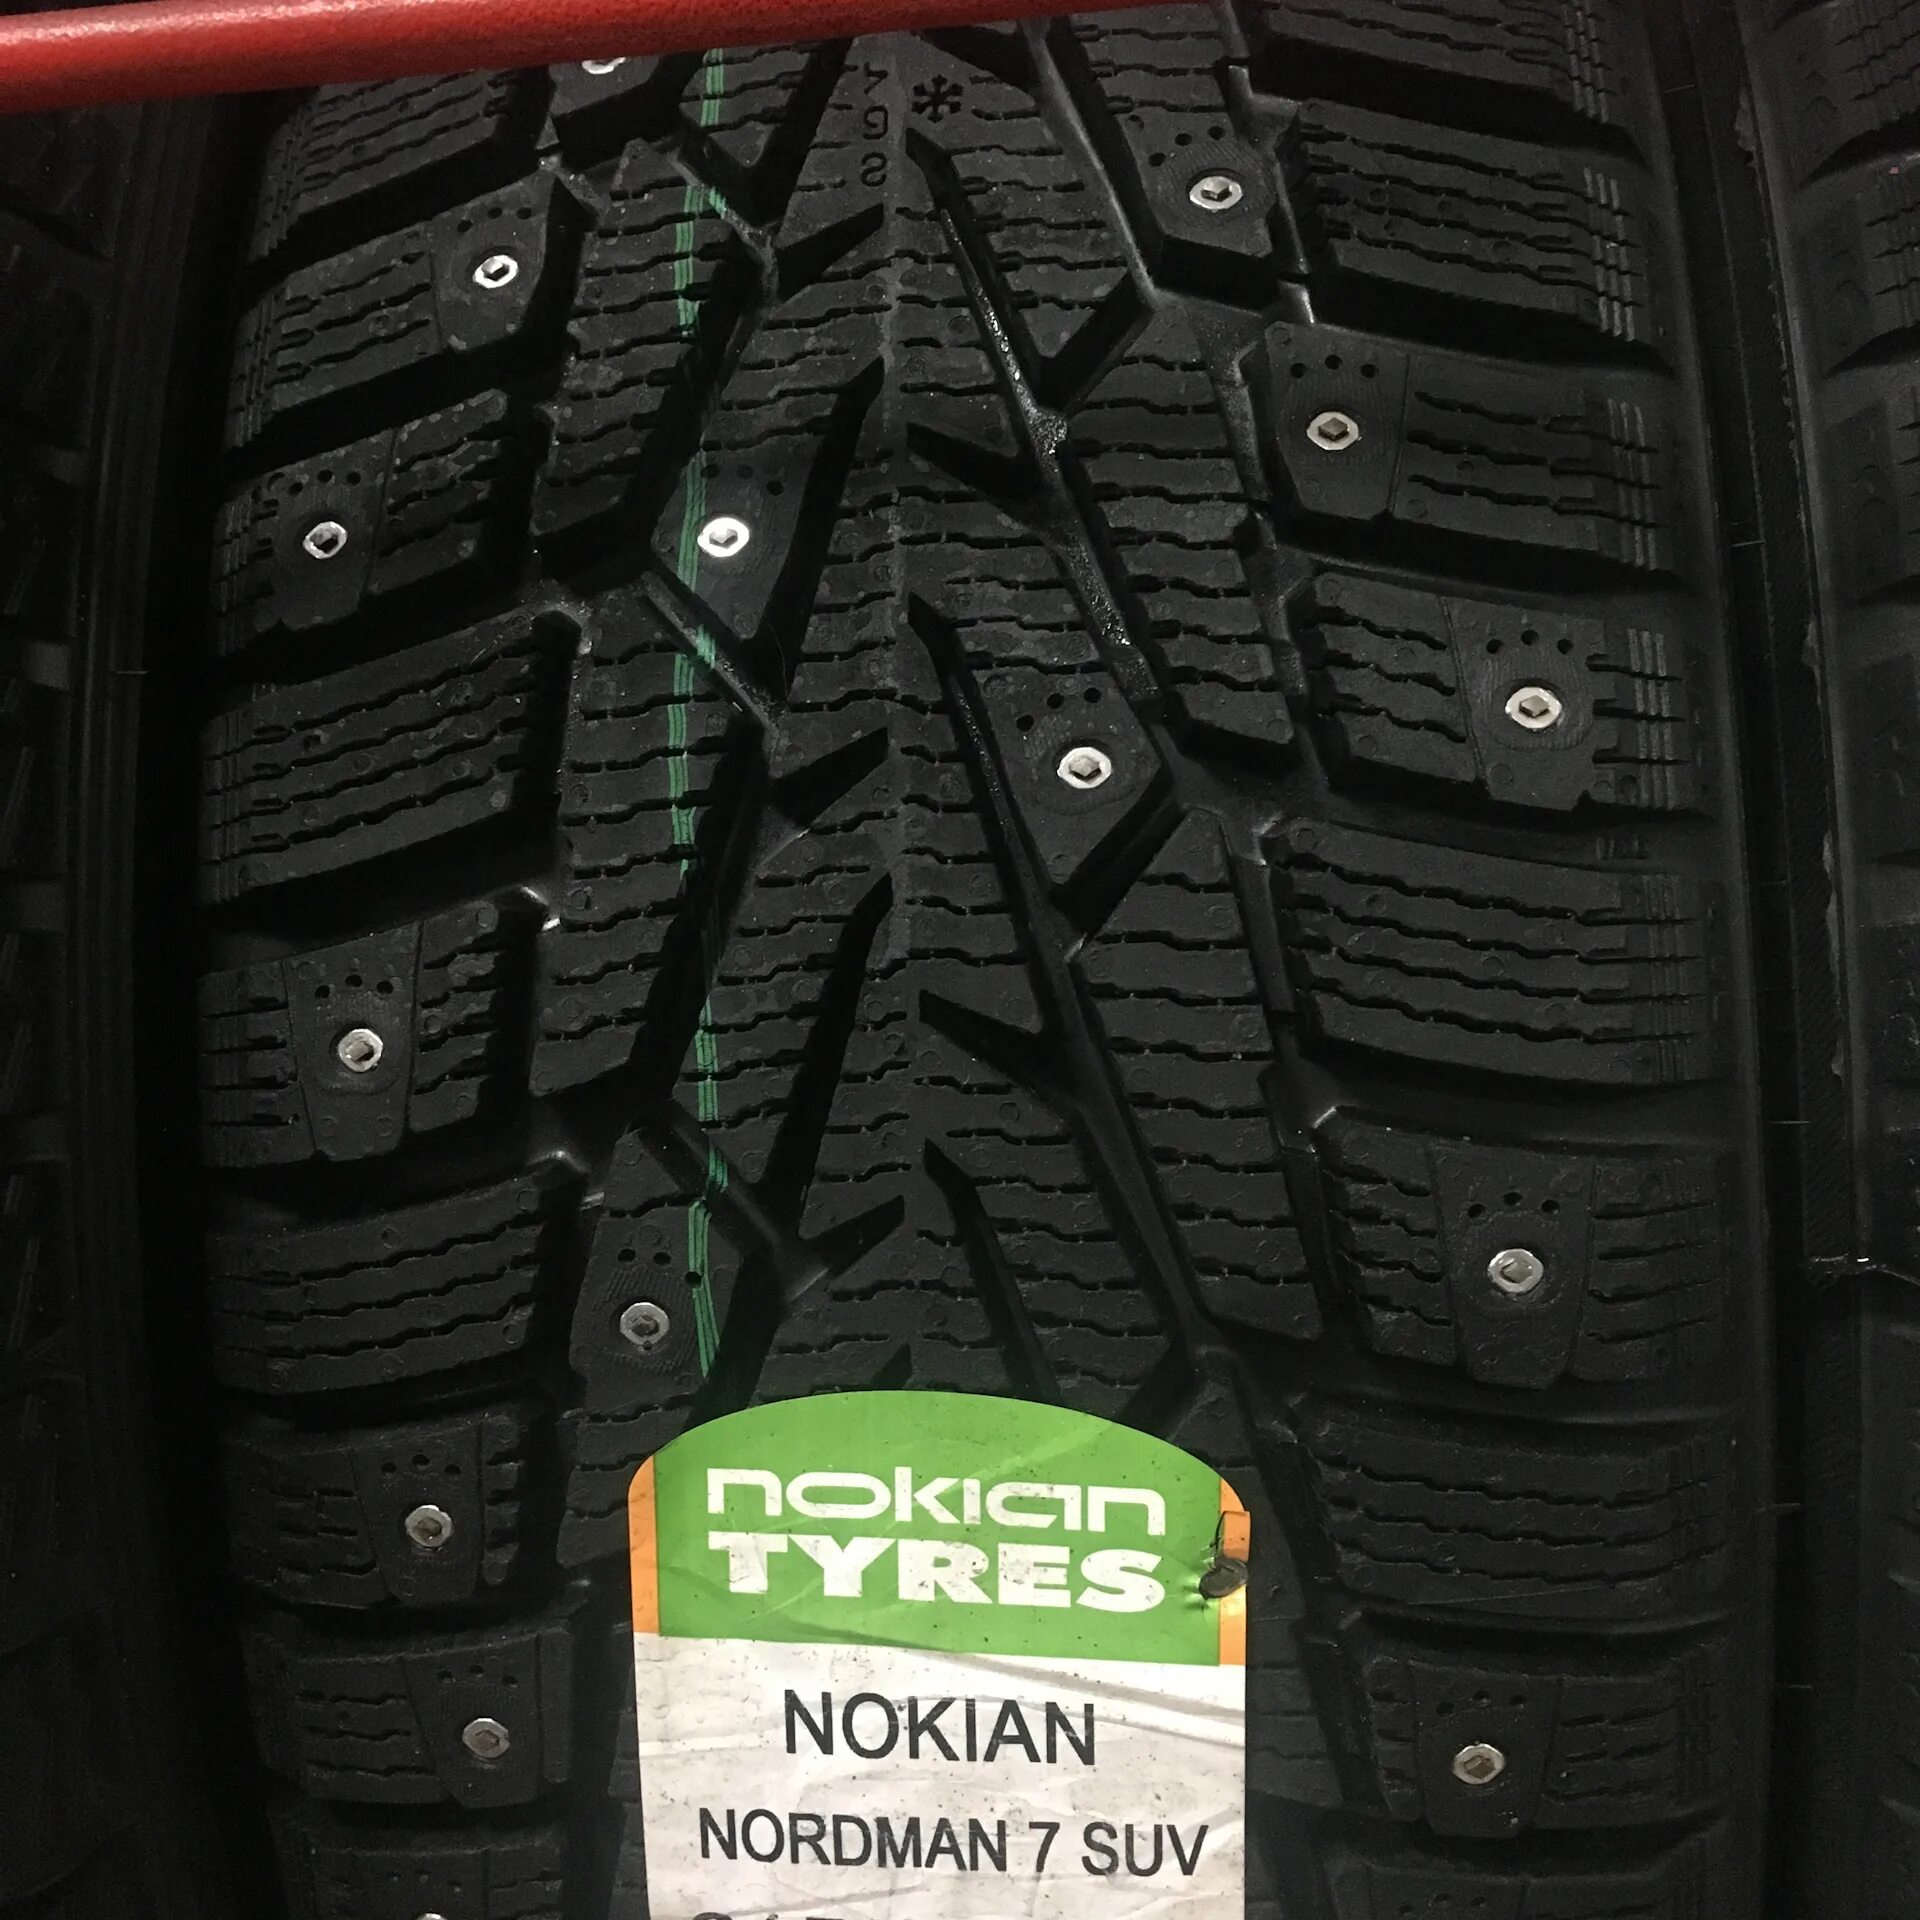 Nordman 265 65 r17. Нордман 7 SUV. Nokian Nordman 7 SUV. Nokian Tyres Nordman 7 SUV. Нордман 7 SUV 215 65 16.